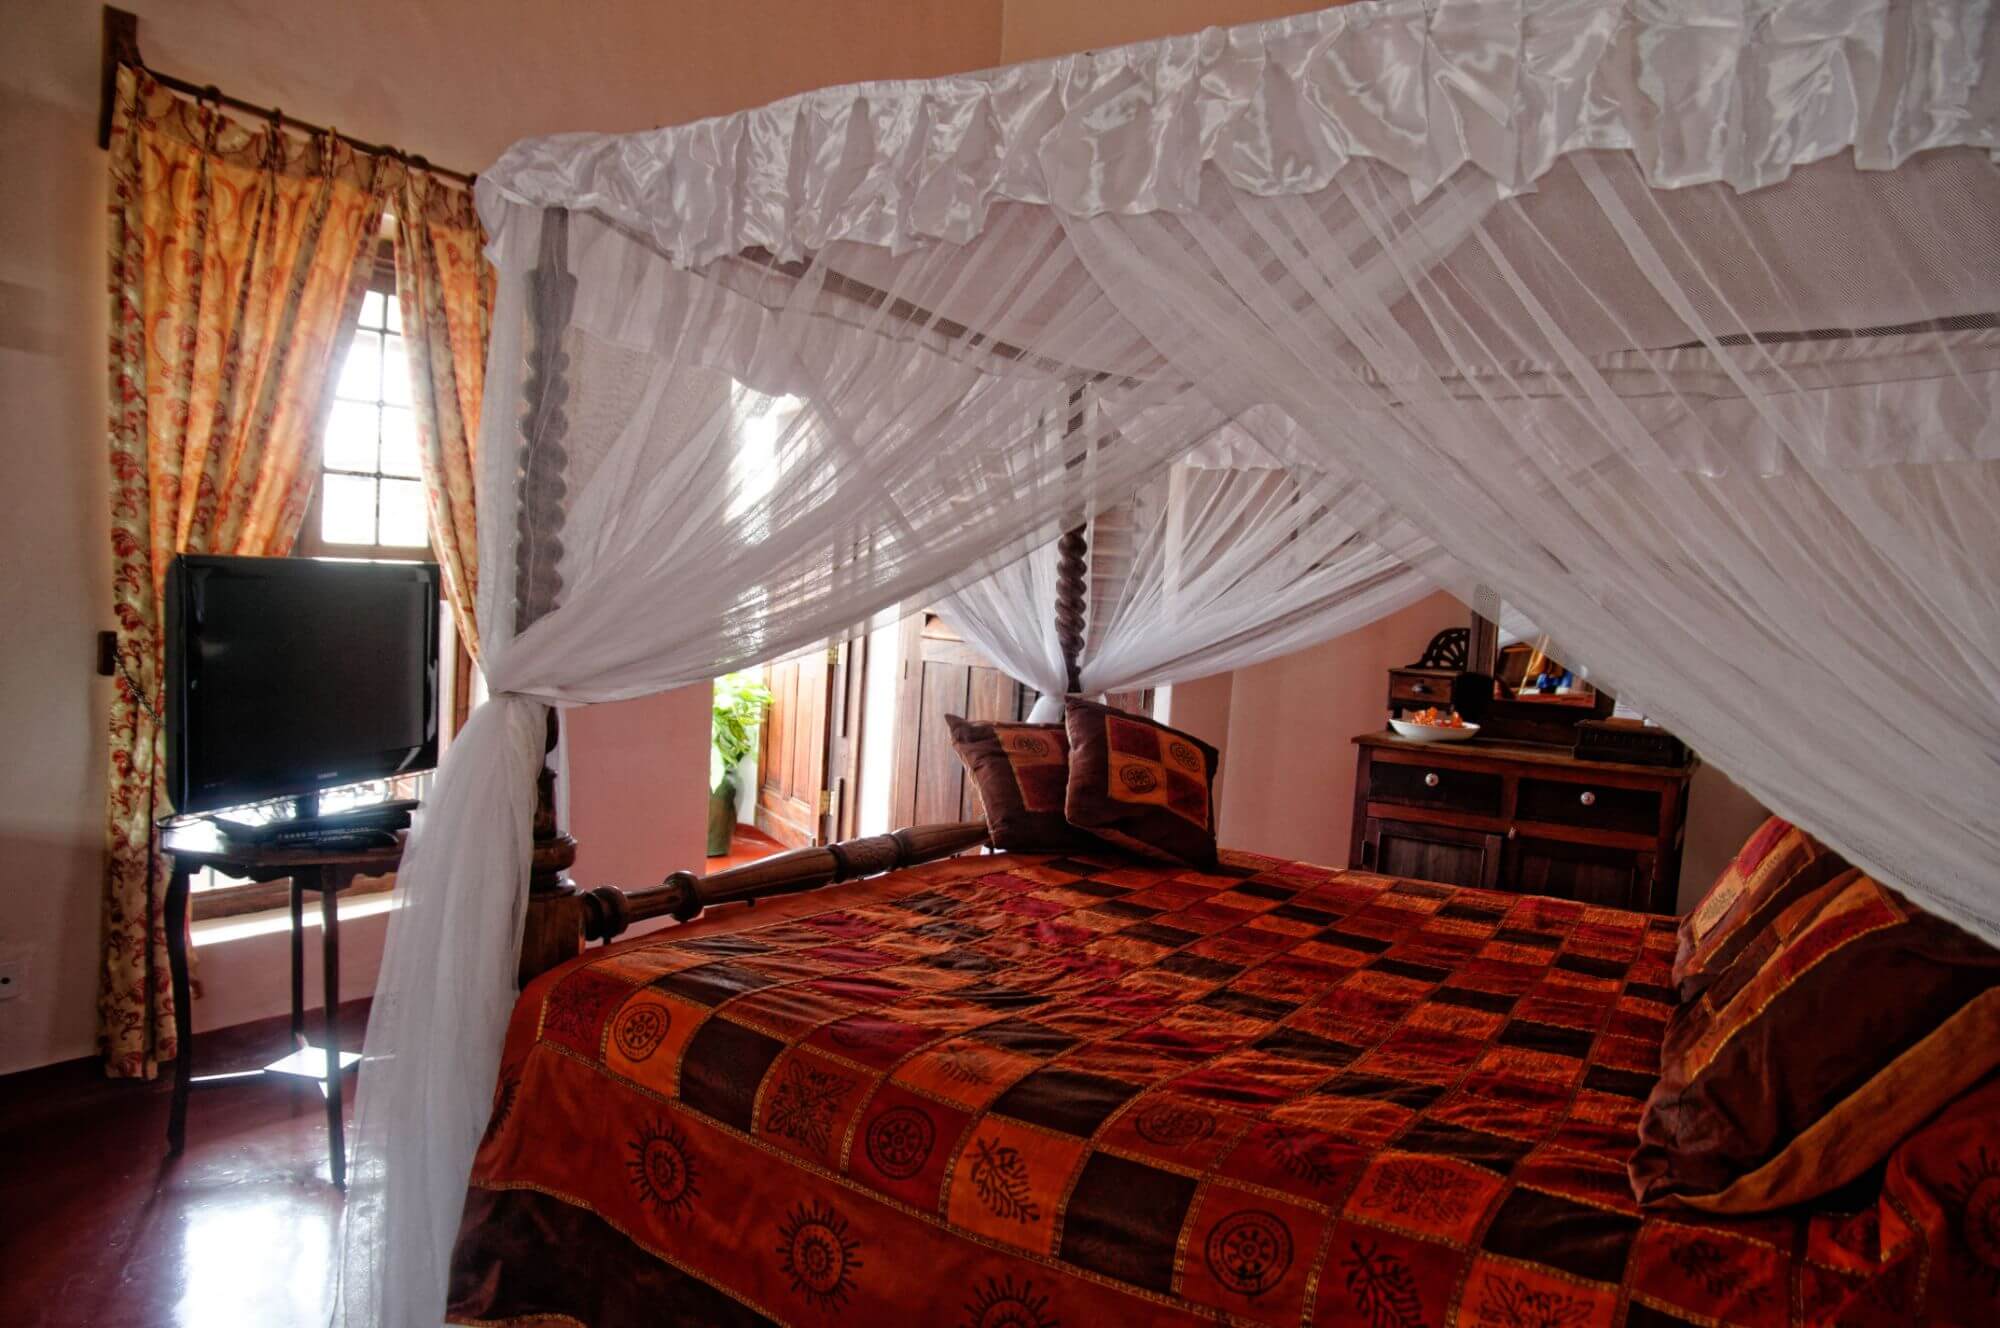 Zanzibar Palace Hotel - Room (6) - 